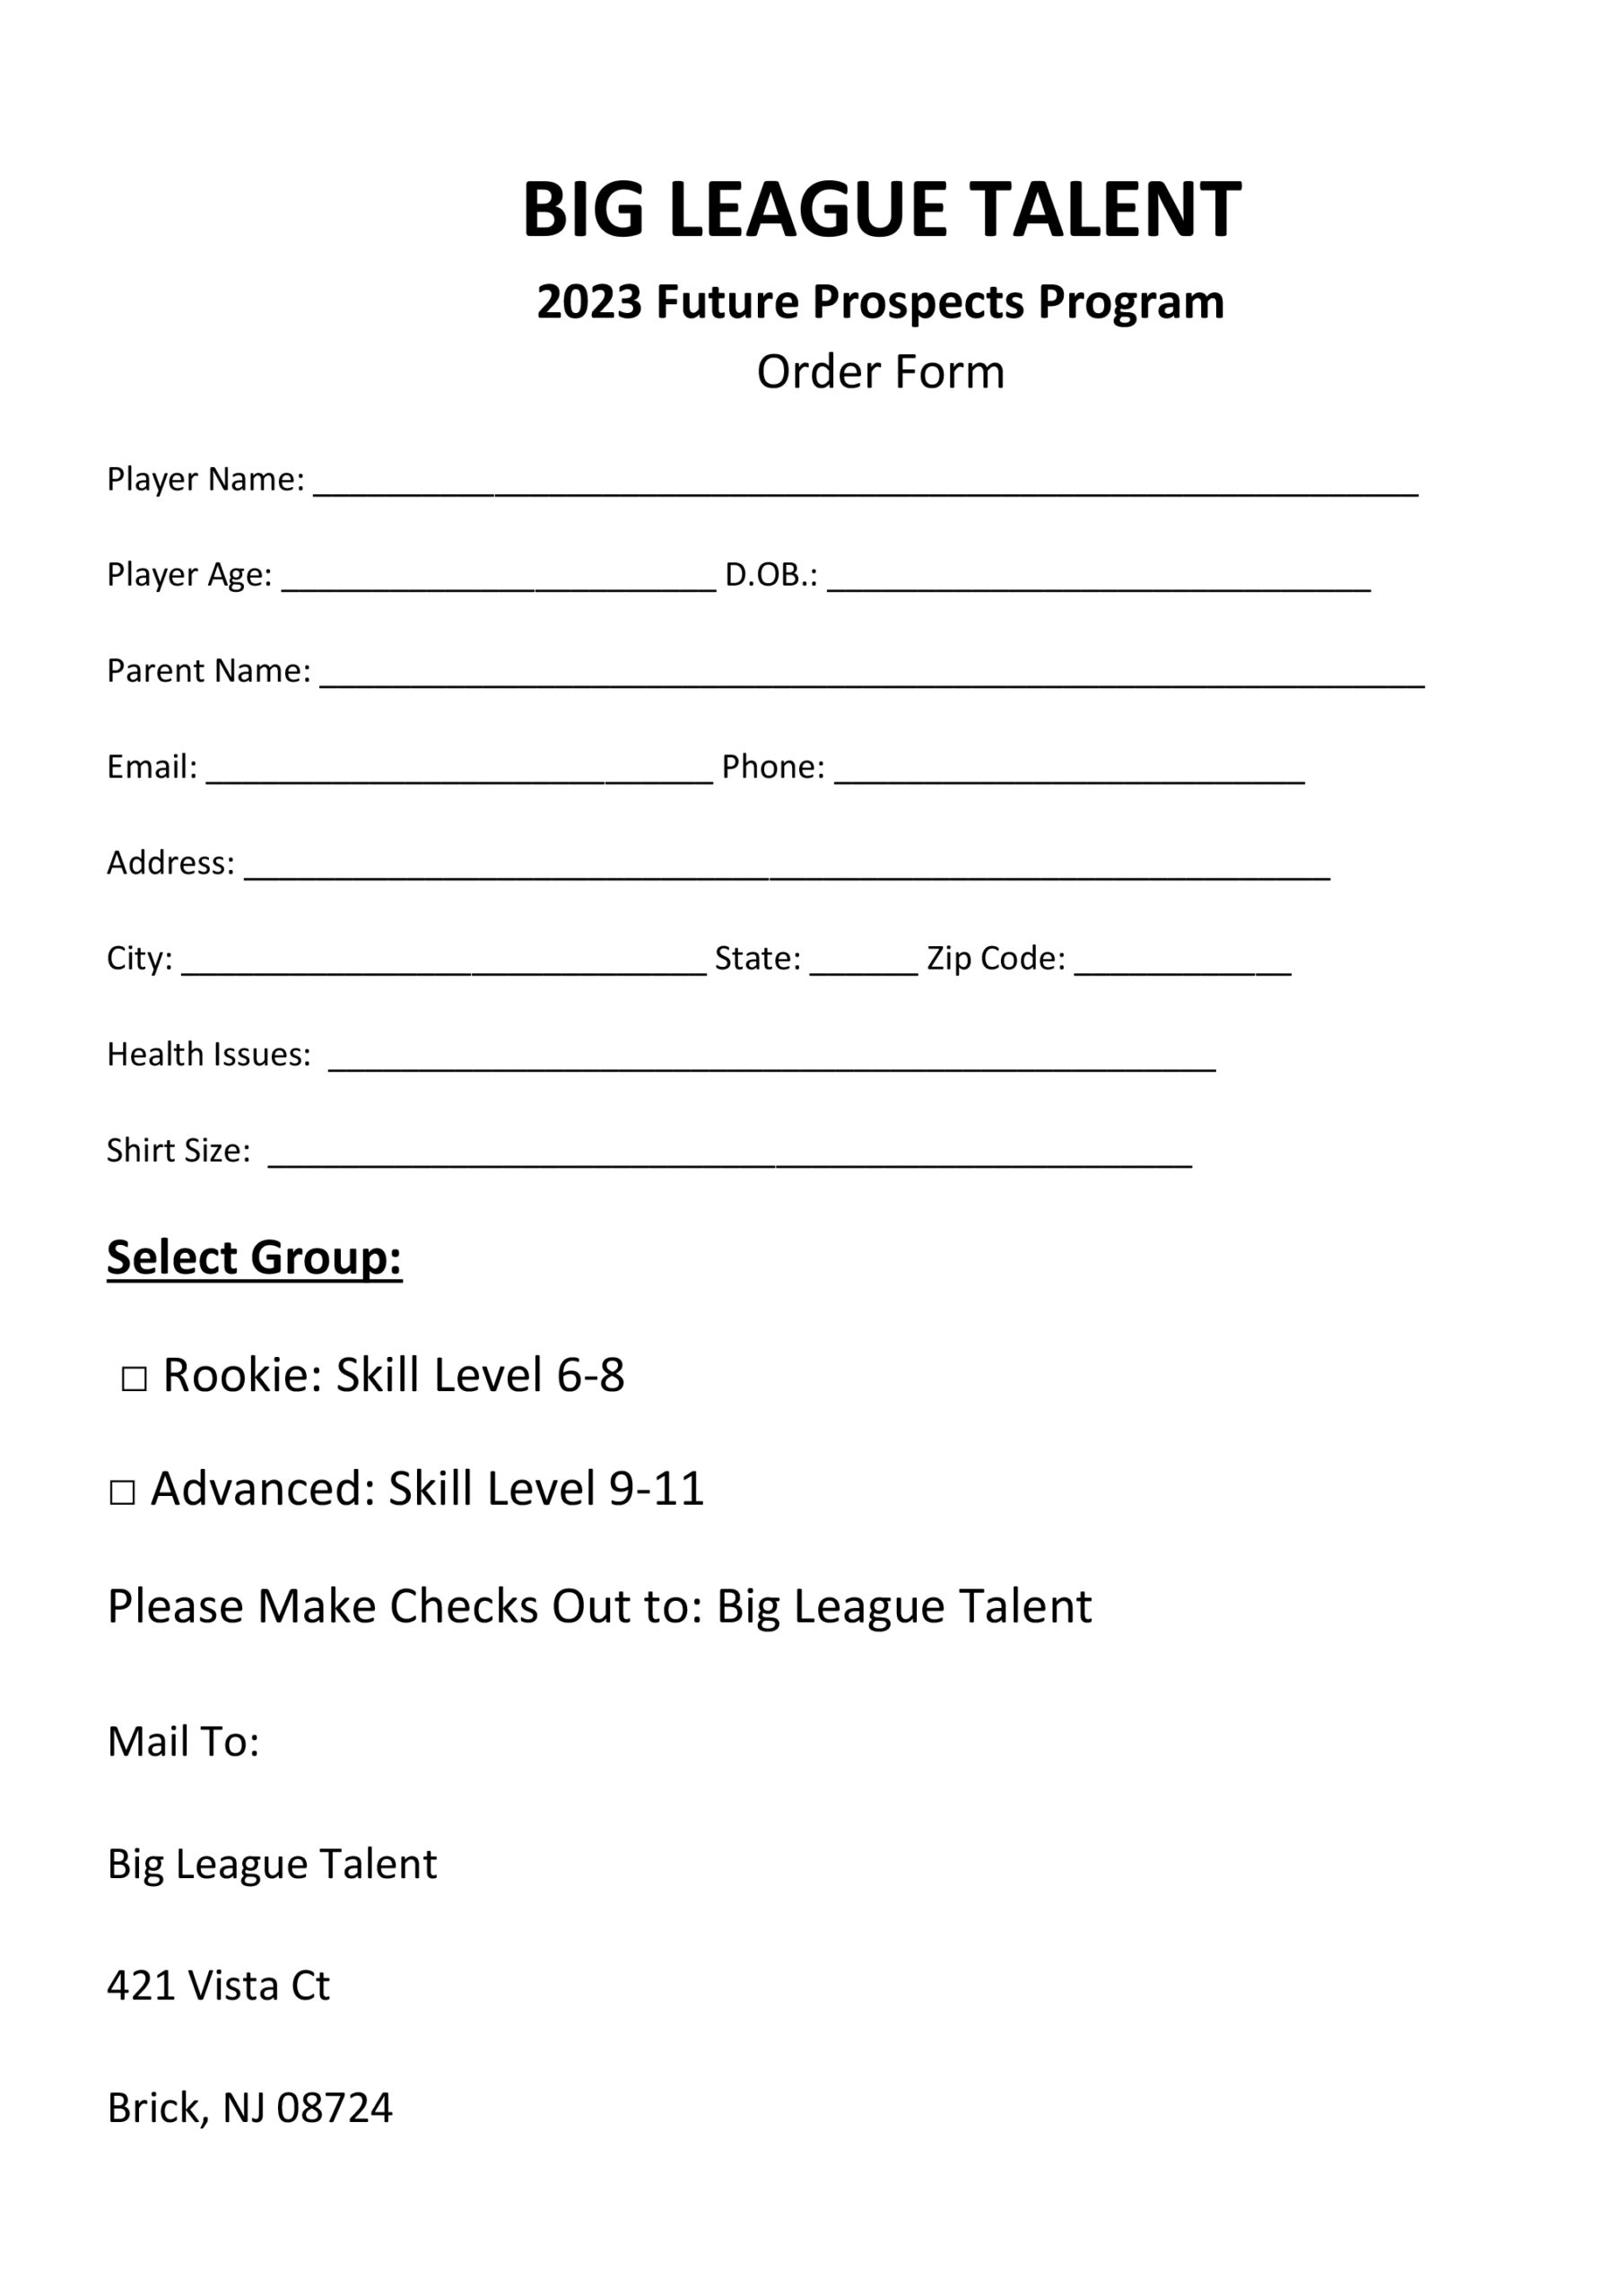 Big League Talent 2023 Future Prospects Flyer-form